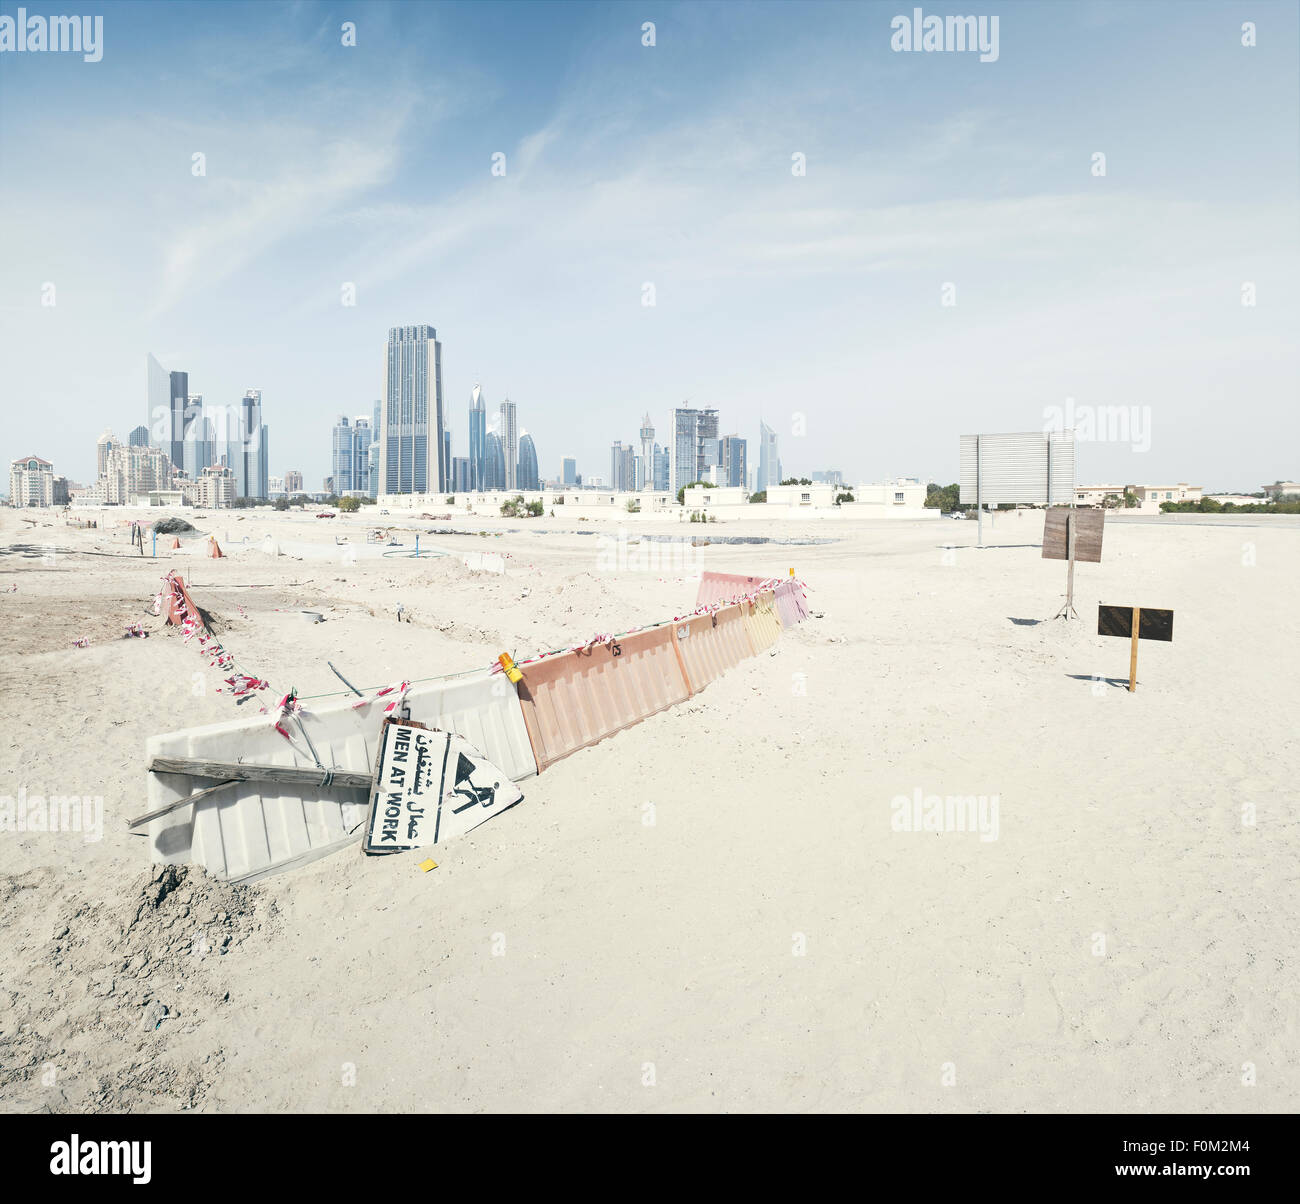 Construction site in the desert, Dubai, UAE Stock Photo